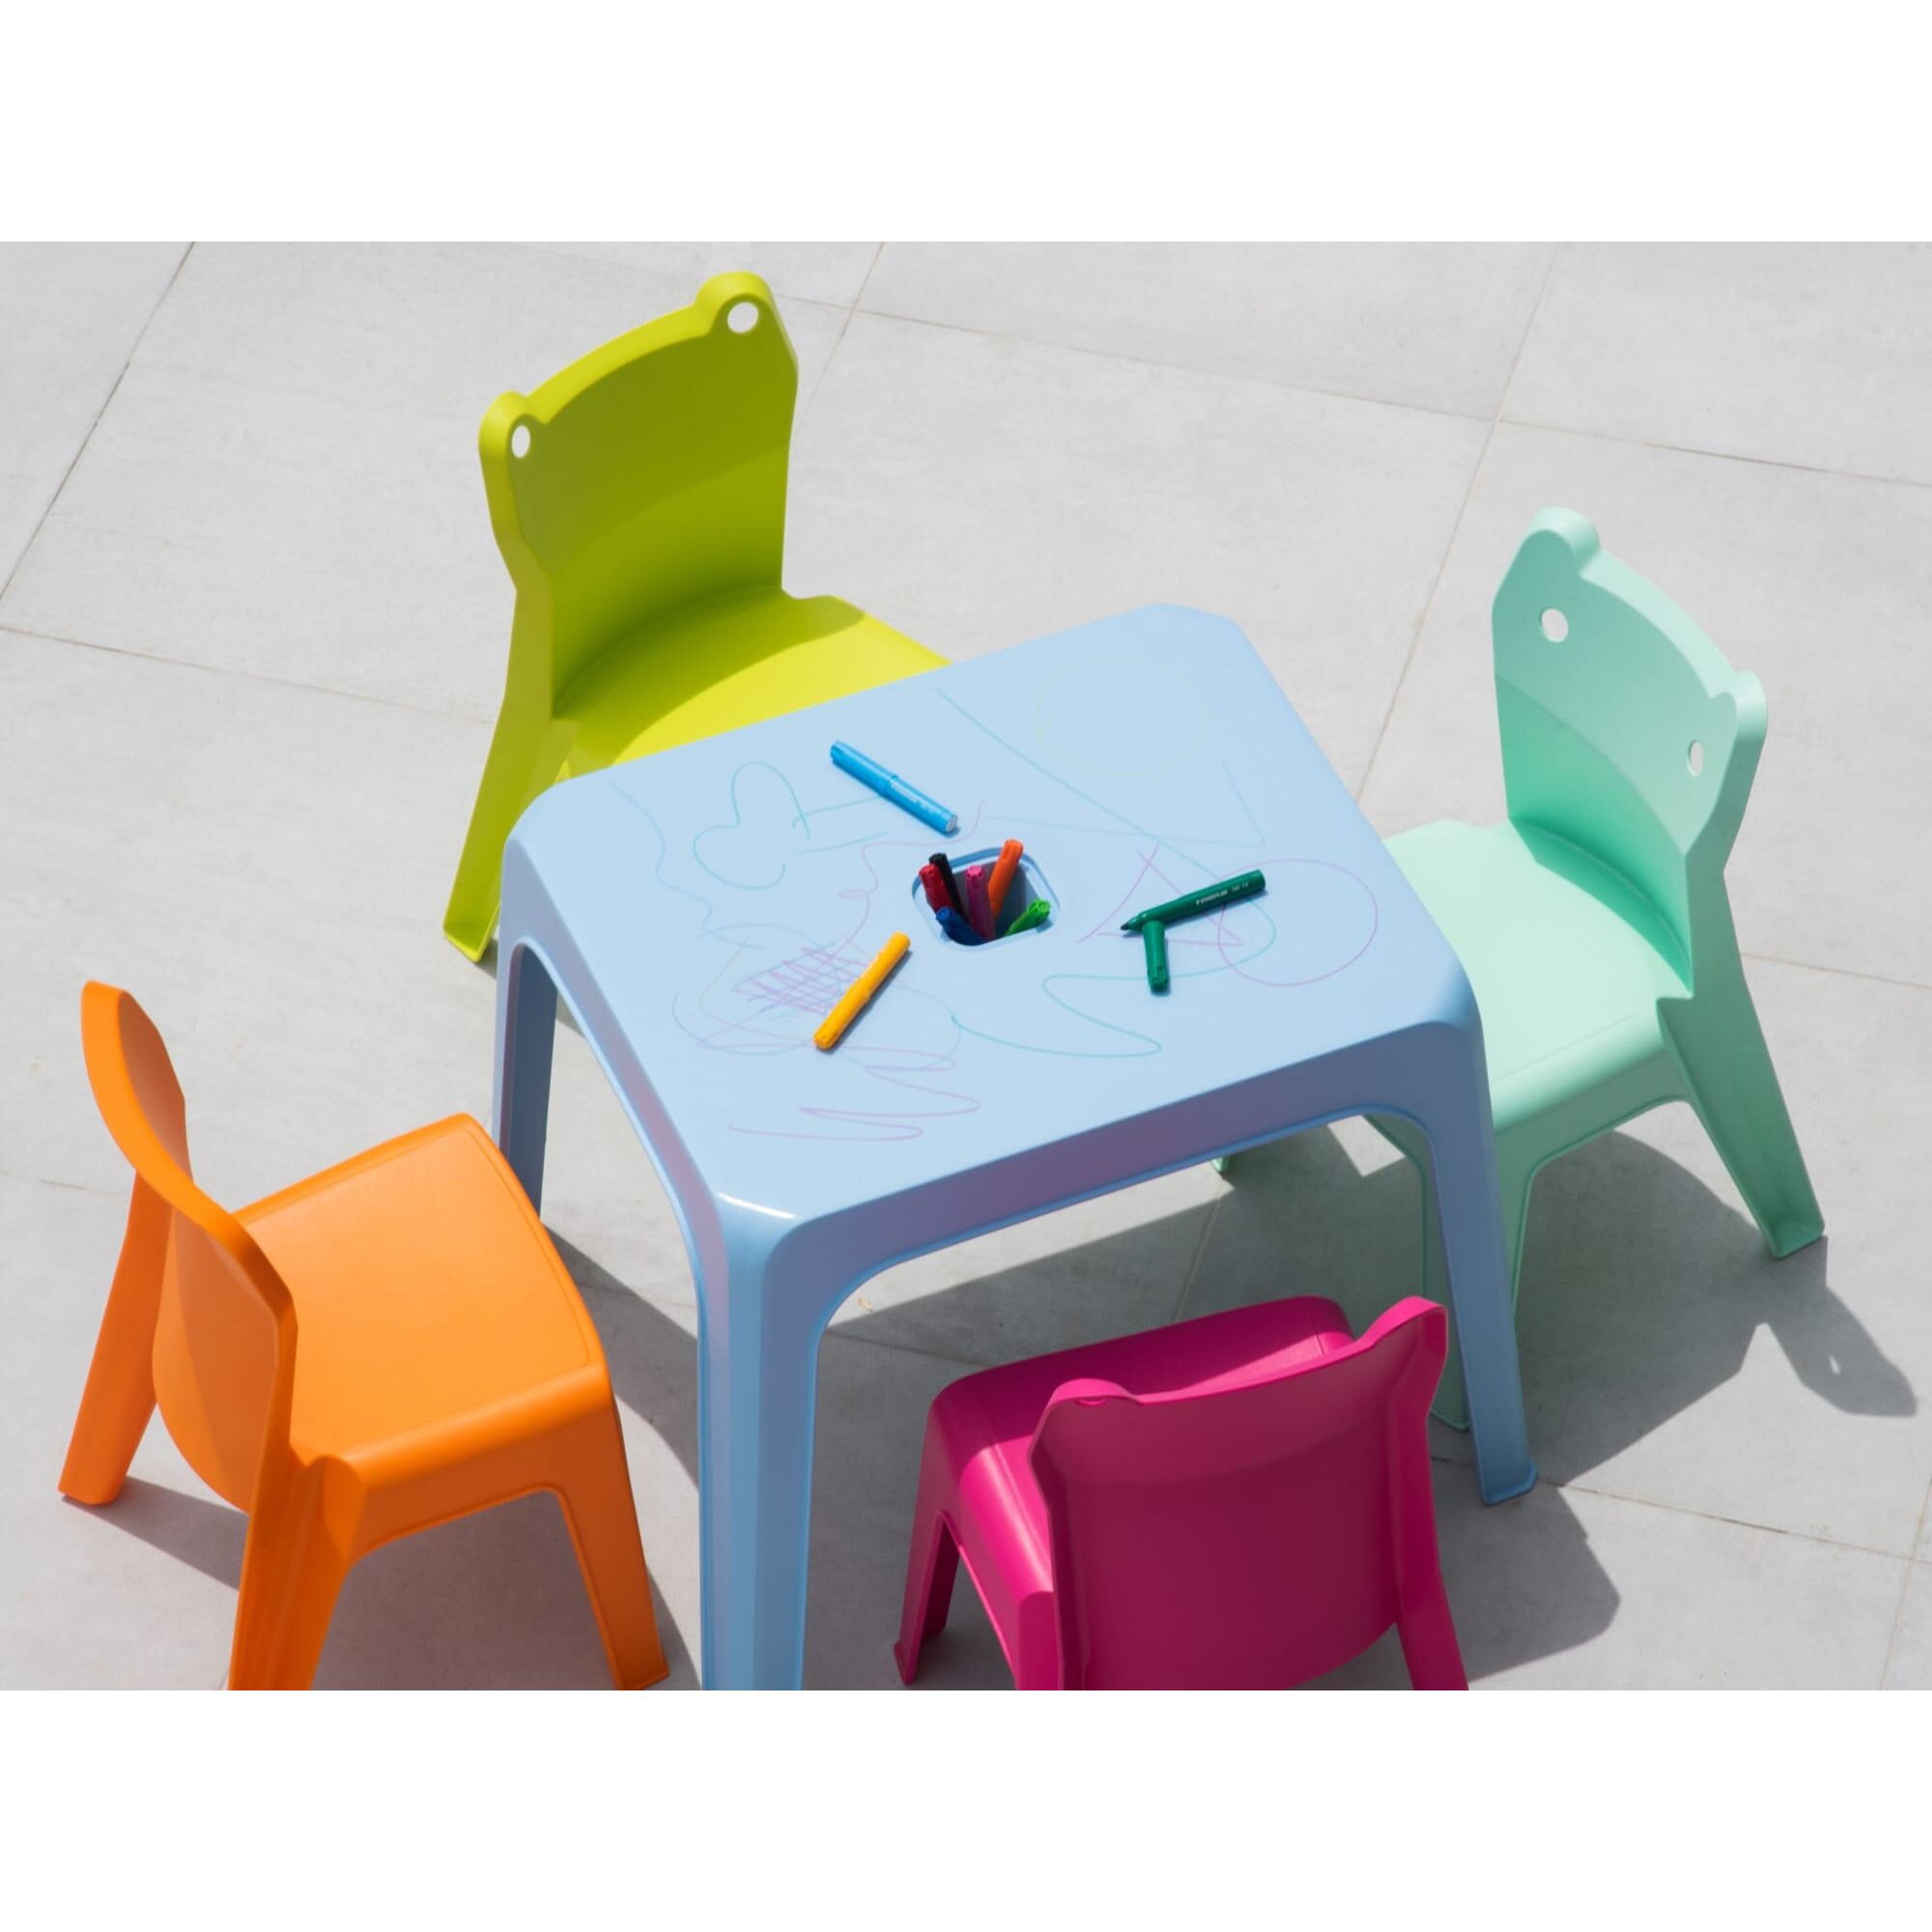 Garbar frog kinderstoel en tafel set 4+1 hemelsblauw oranje